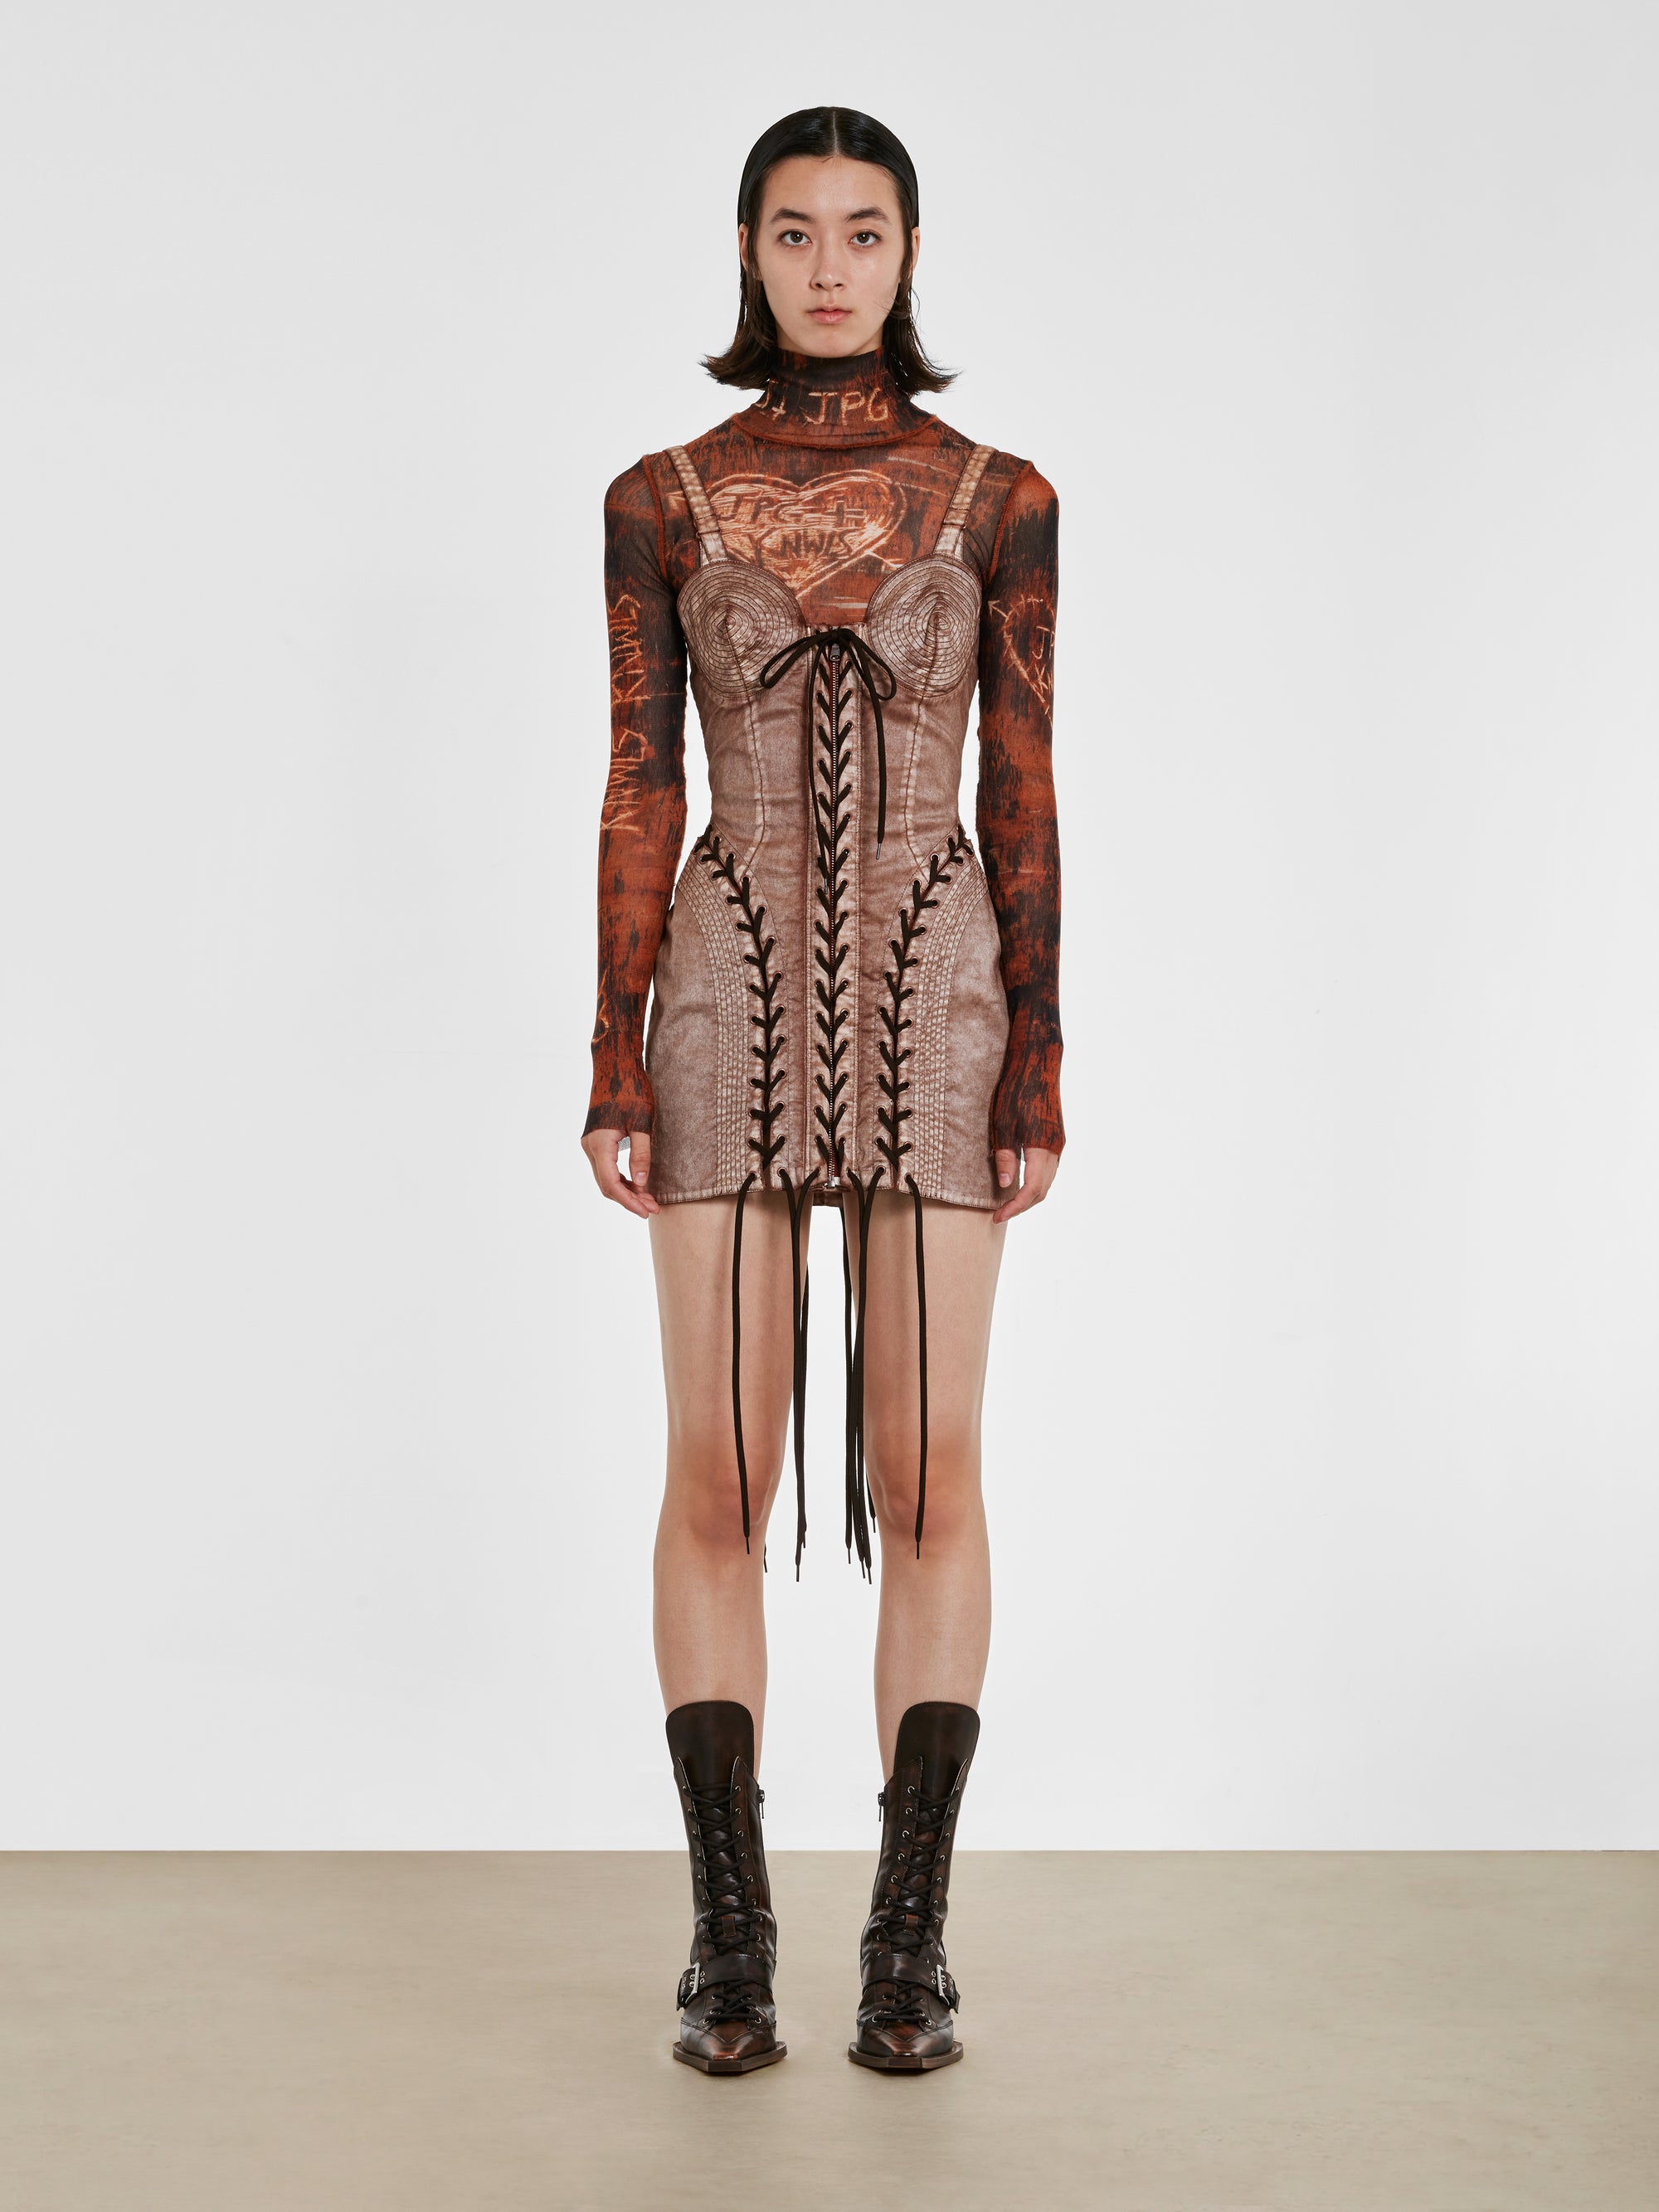 Jean Paul Gaultier - KNWLS Women’s Conical Laced Dress - (Brown/Ecru) view 1